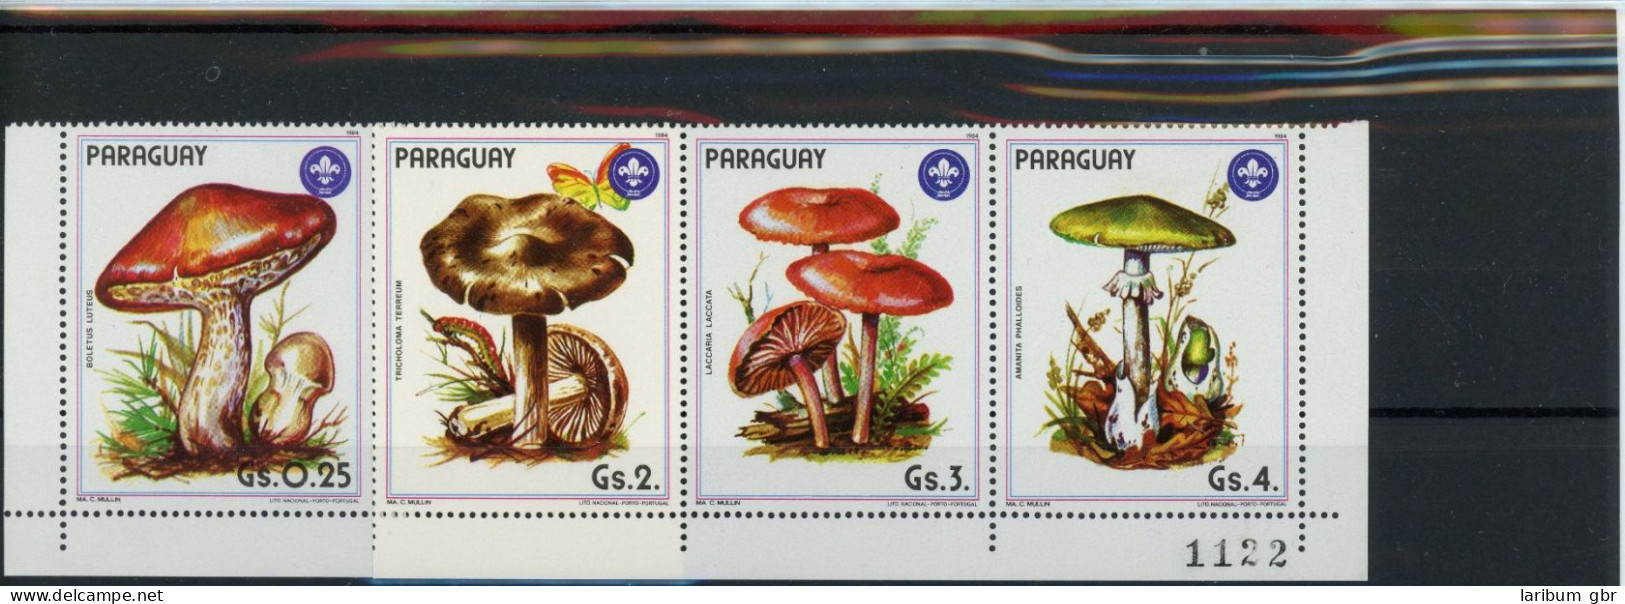 Paraguay 3835-3841 Postfrisch Pilze #GL755 - Paraguay